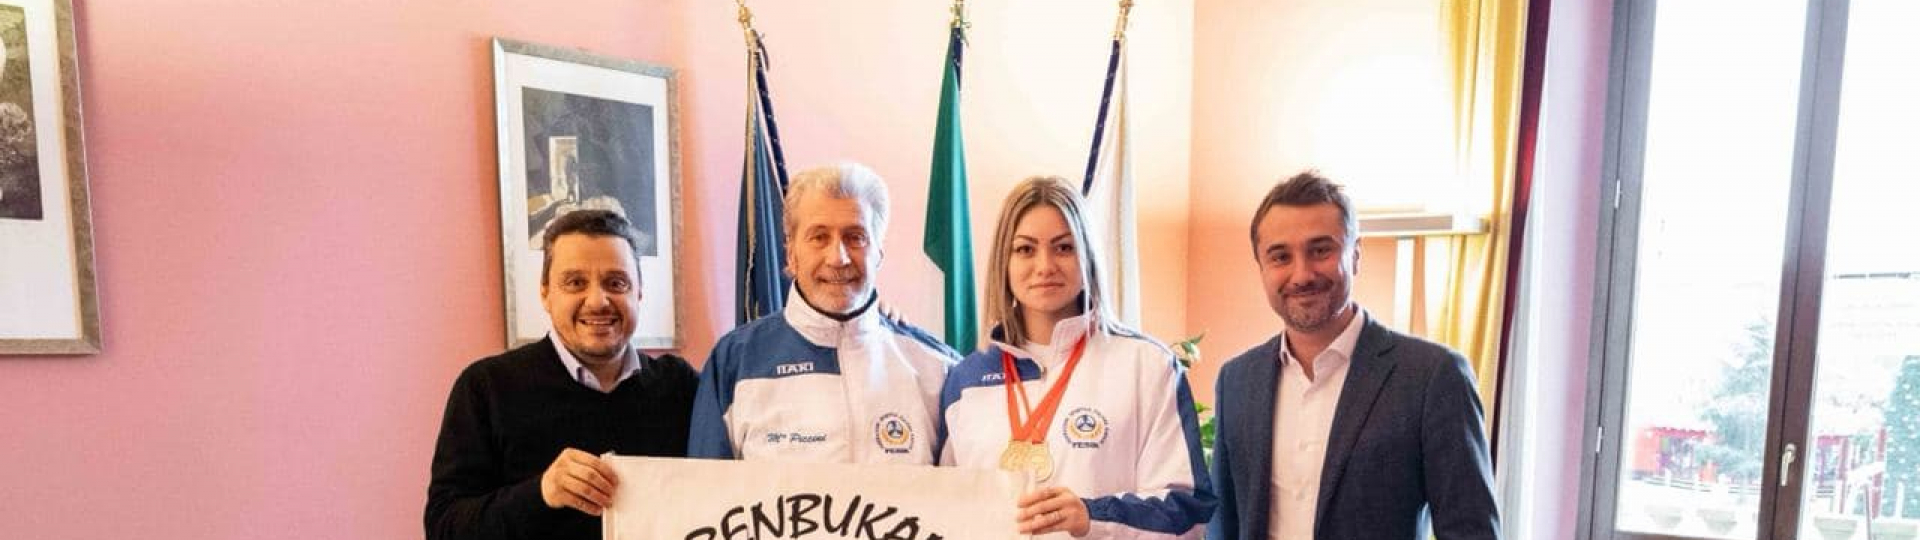 La campionessa mondiale di Karate Fesik ricevuta dal sindaco